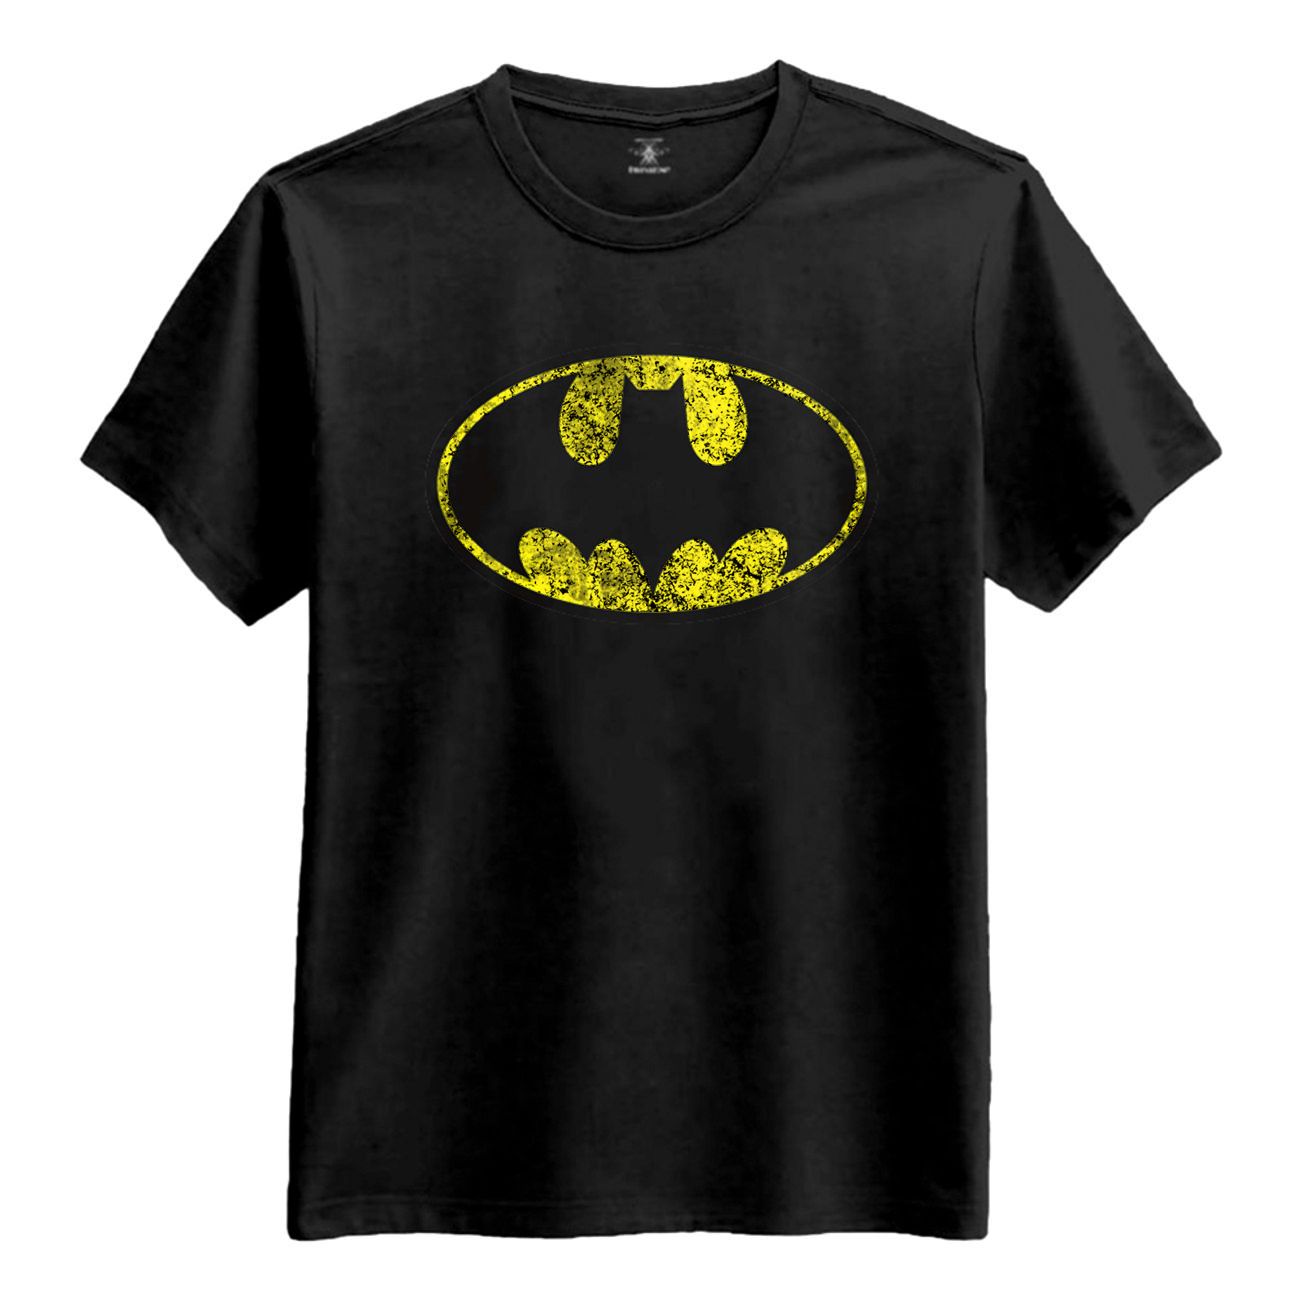 batman-logo-t-shirt-13651-3